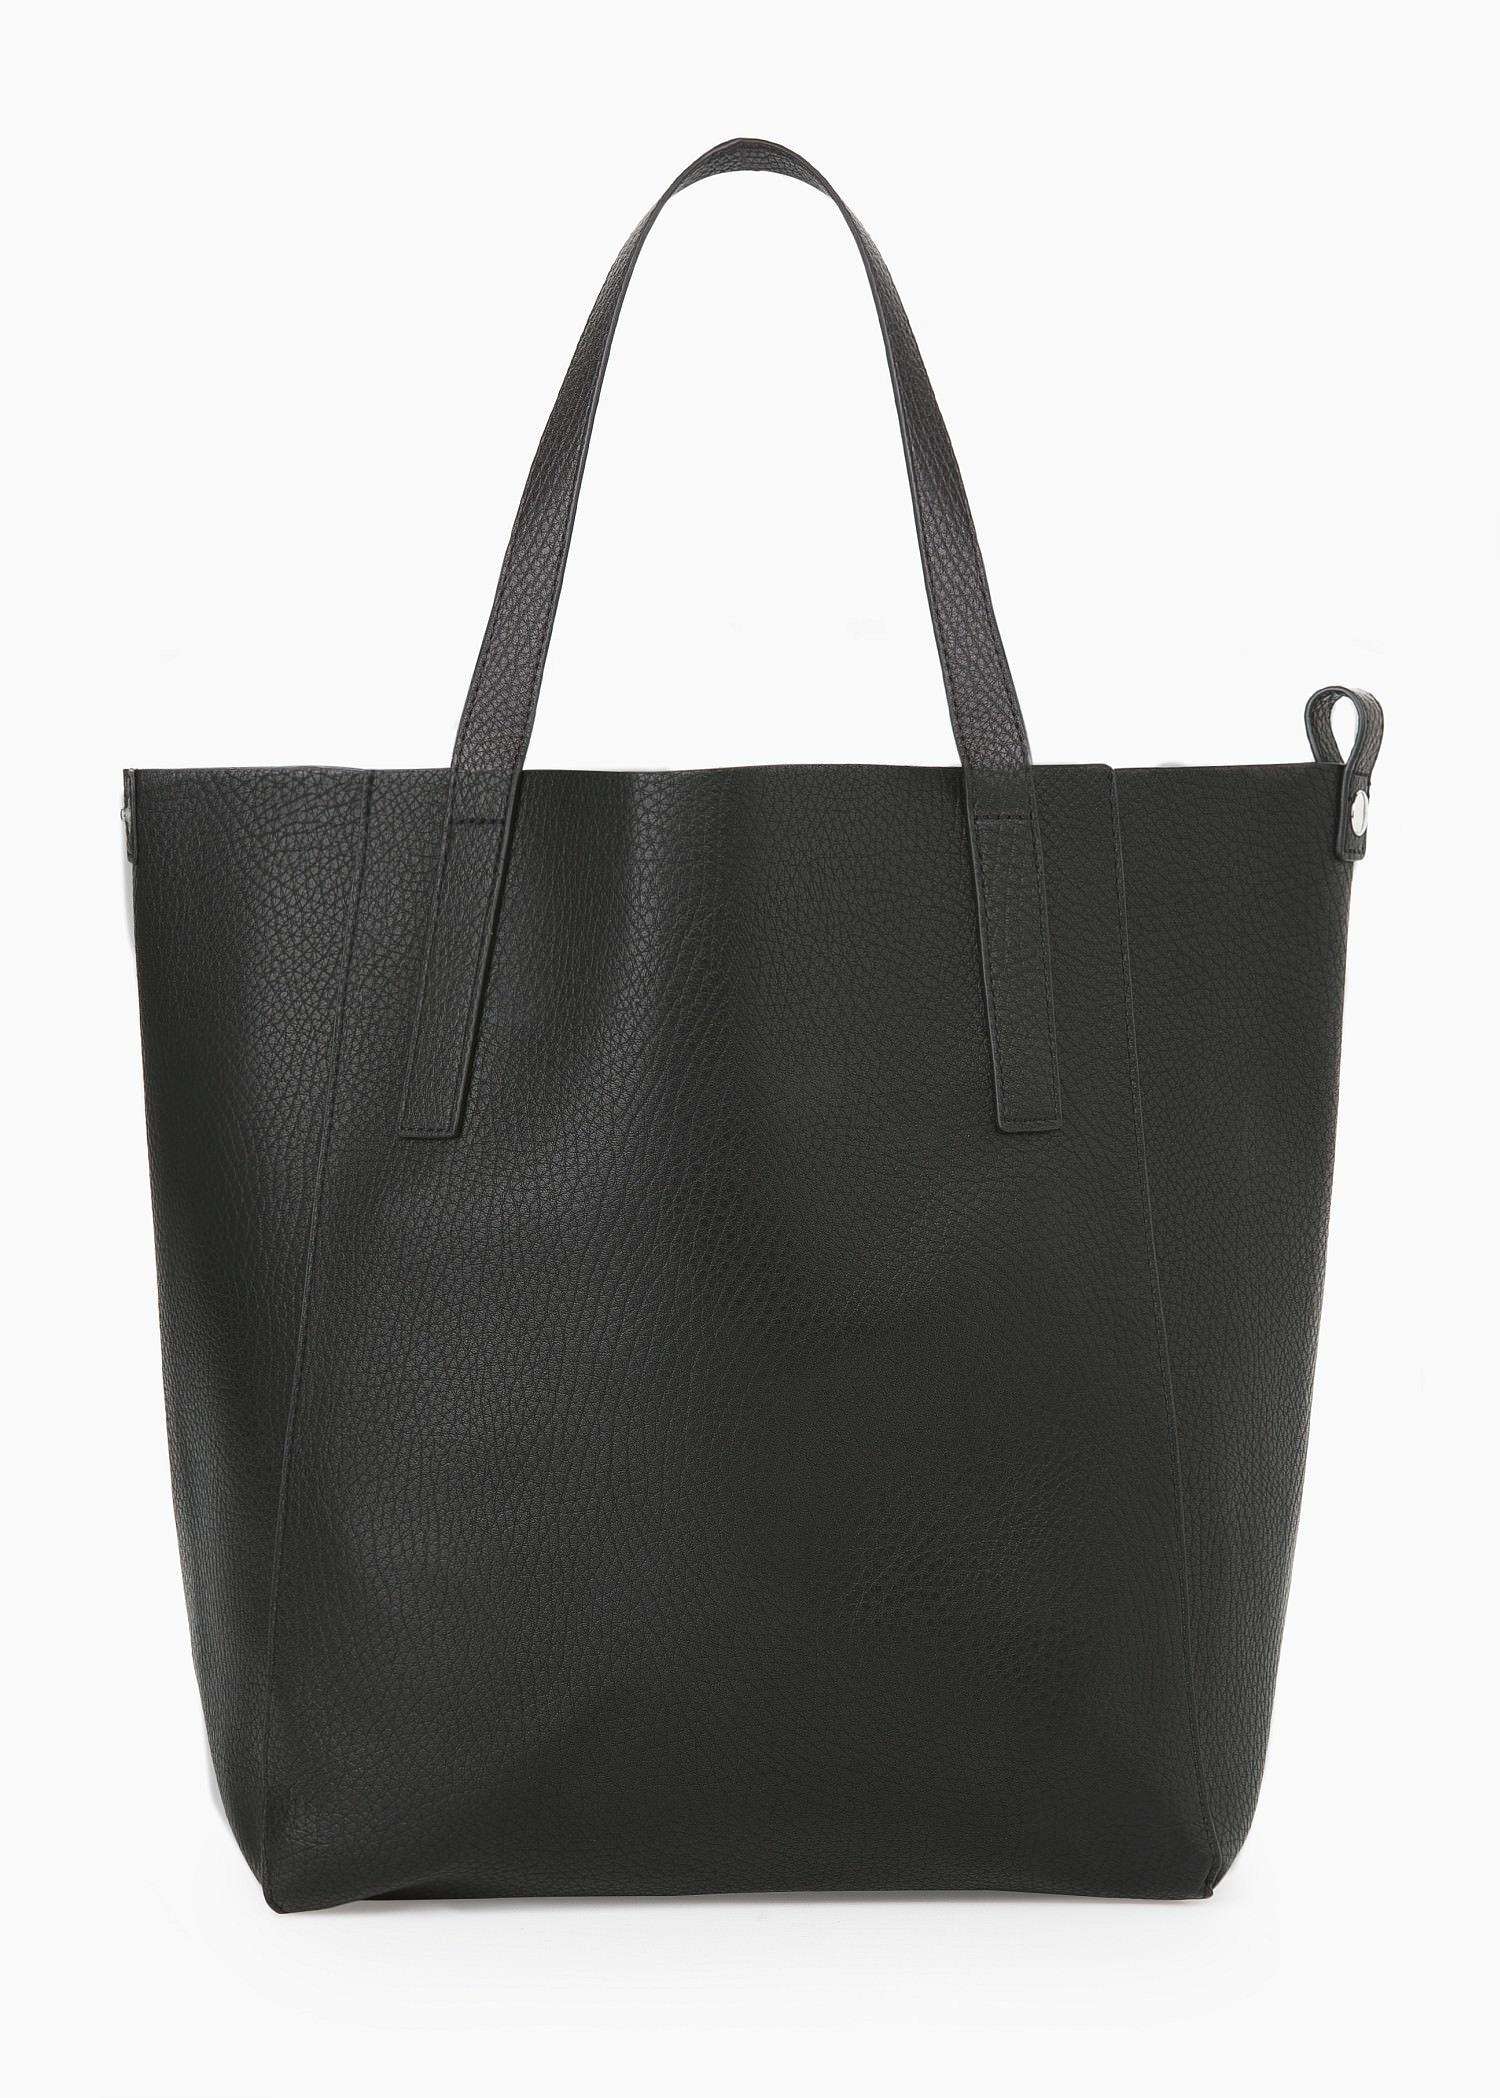 Lyst - Mango Faux-Leather Shopper Bag in Black